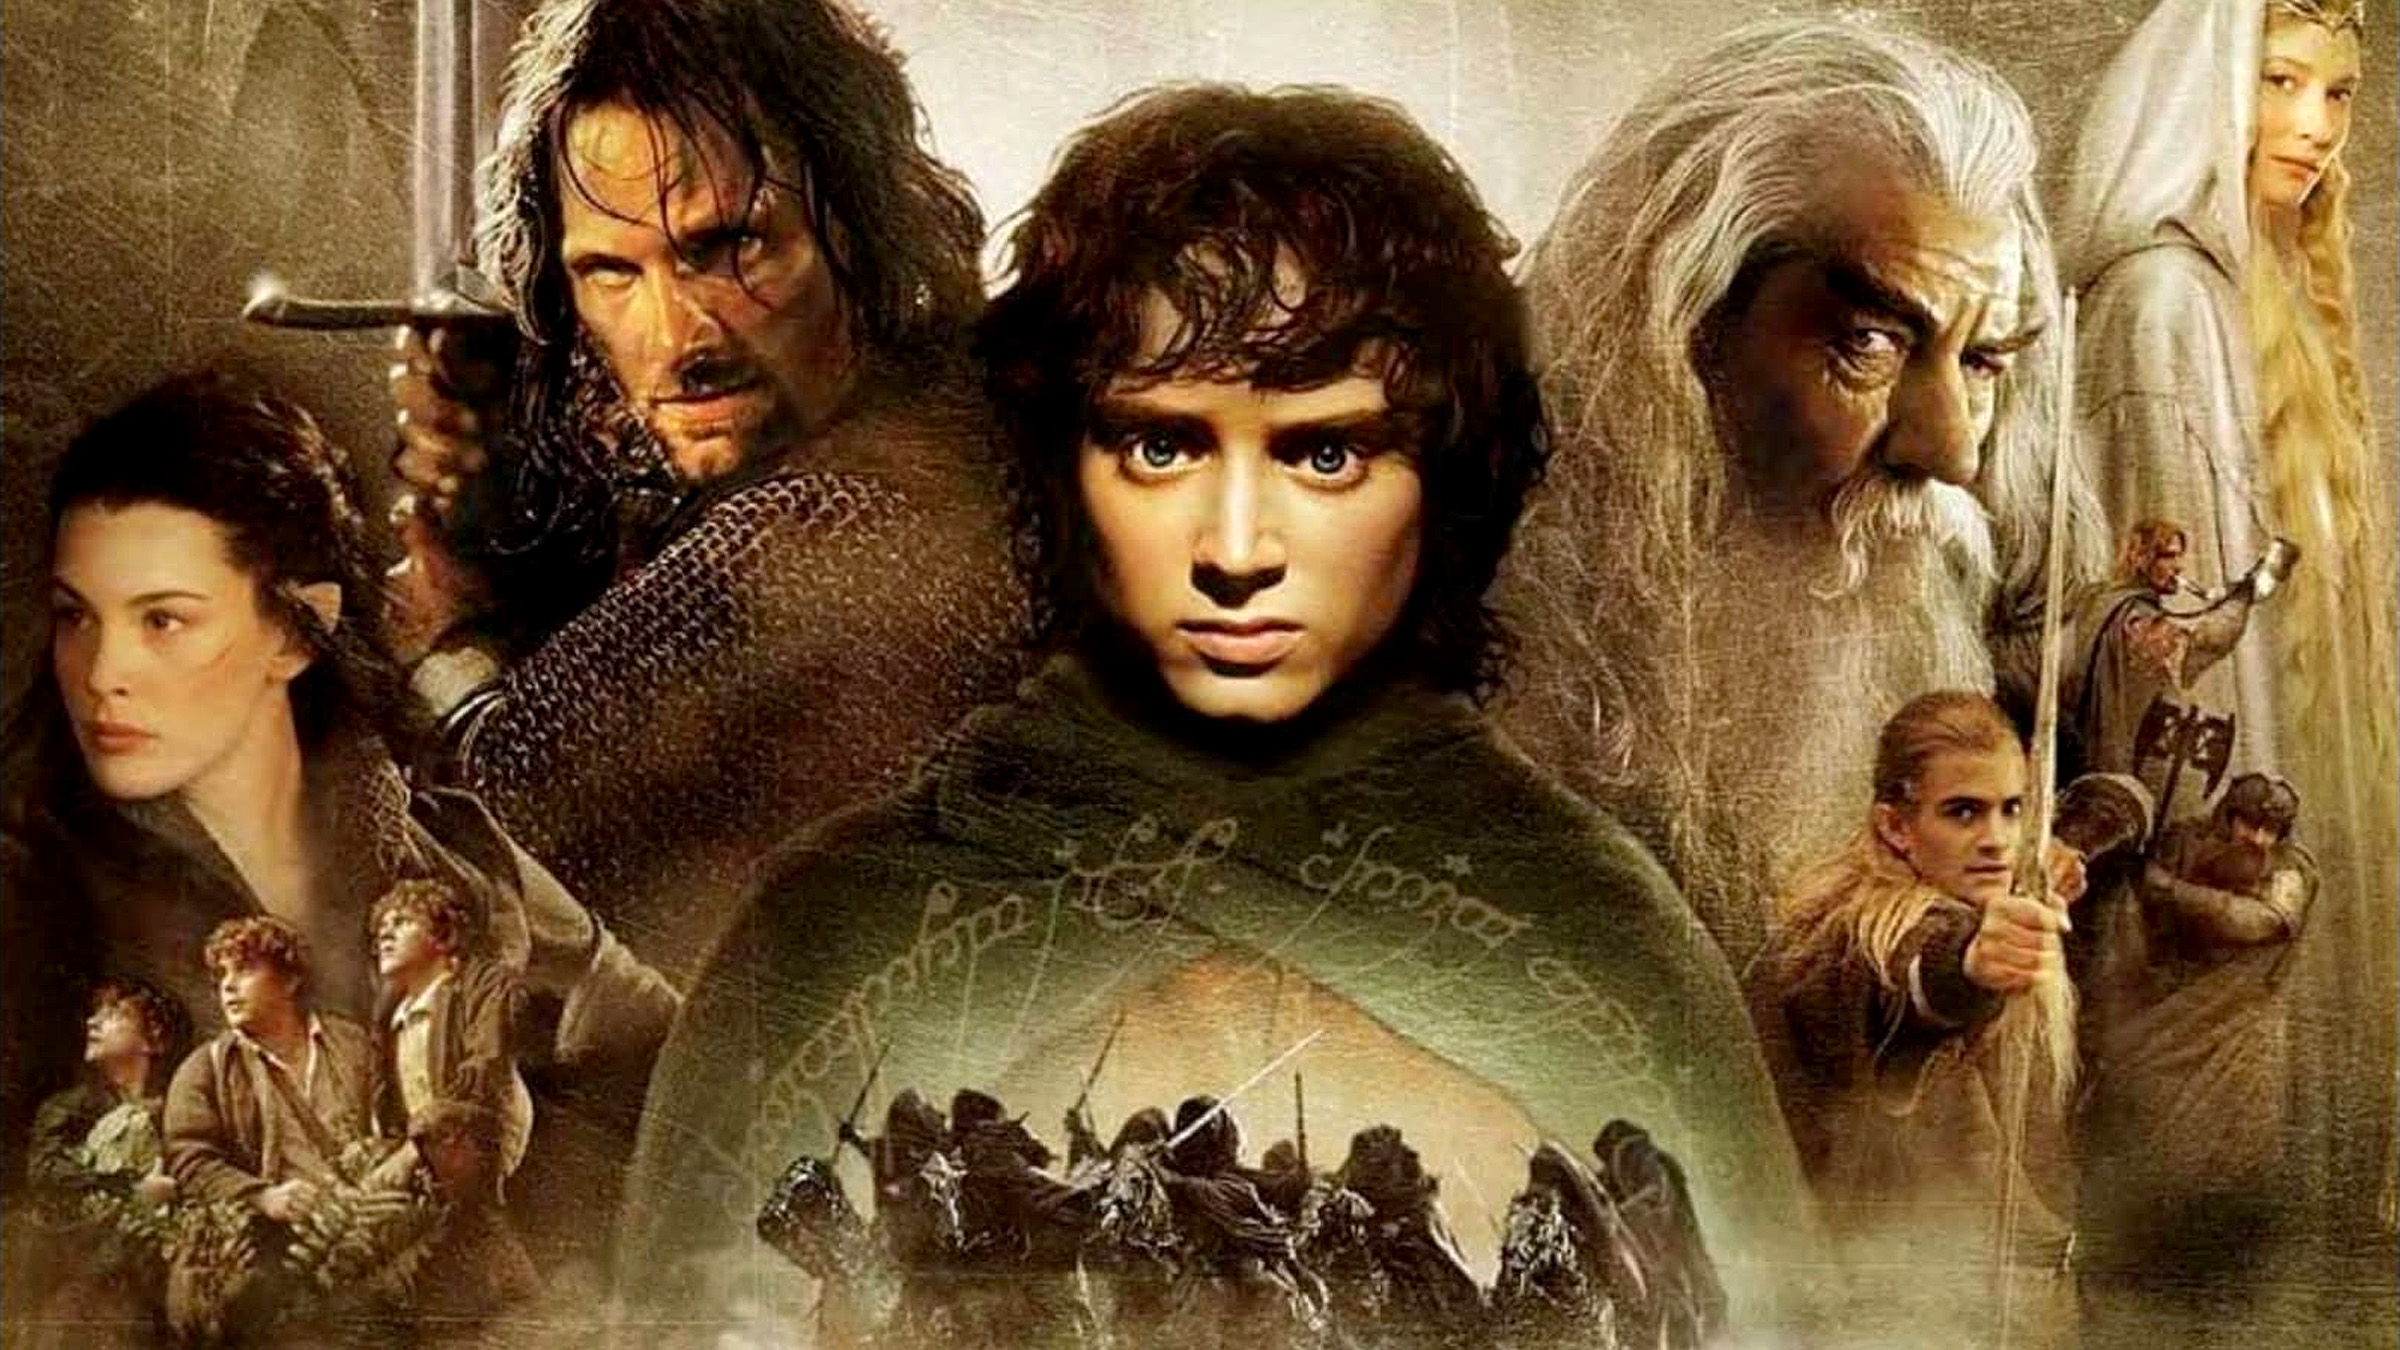 Kangoeroe spontaan Communisme The Lord of the Rings" Turns 20: Looking Back on an Epic Cinematic Legacy